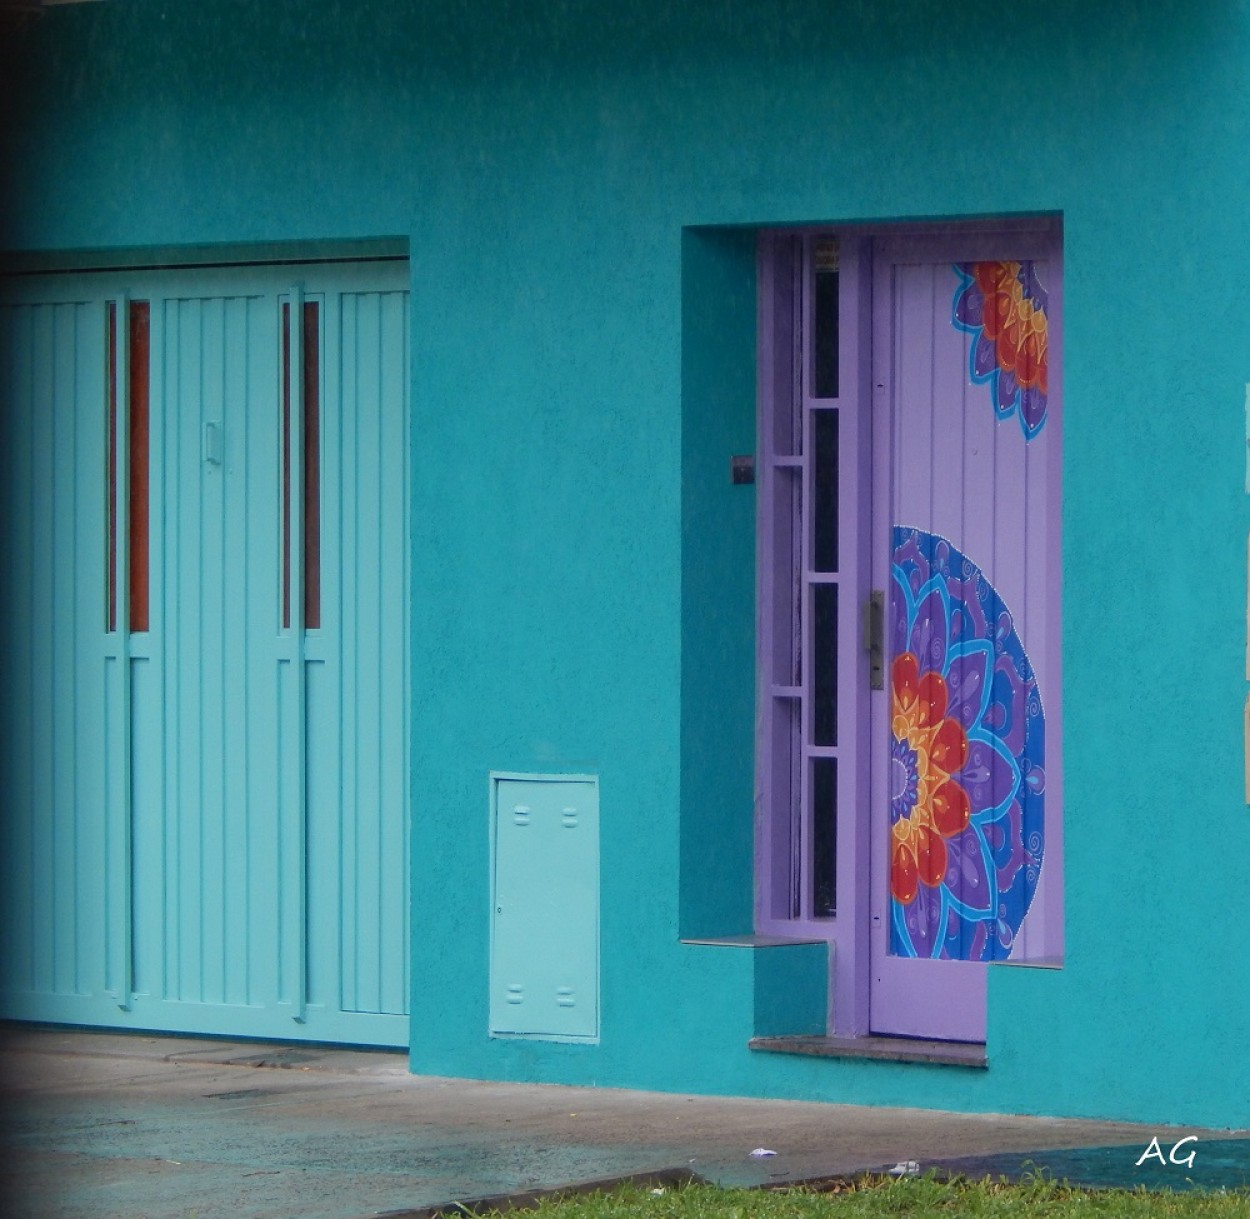 "La casa pintada" de Ana Giorno